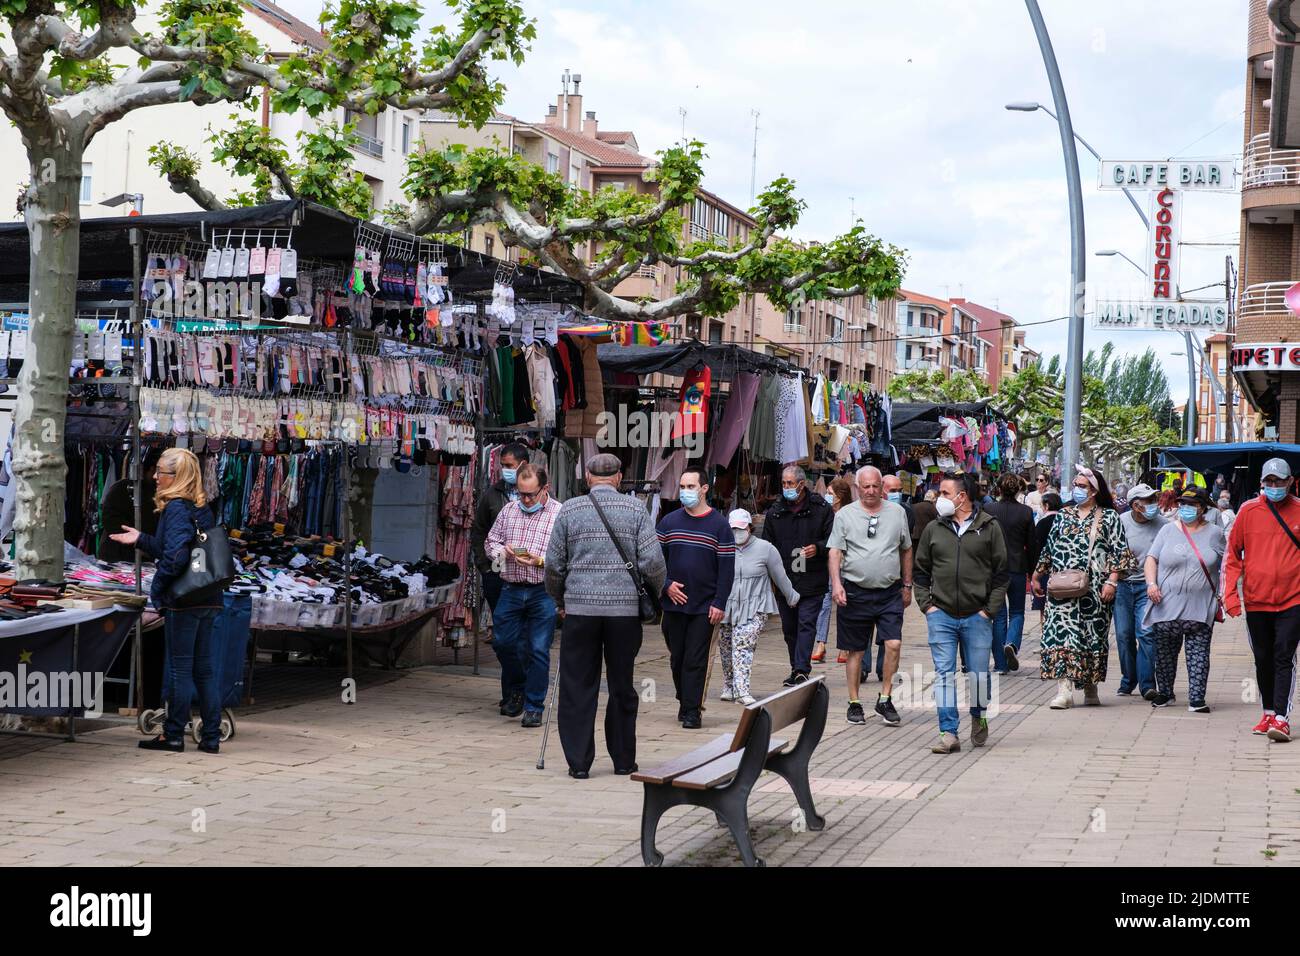 Spain, Astorga, Castilla y Leon. Tuesday Market, Street Scene. Stock Photo